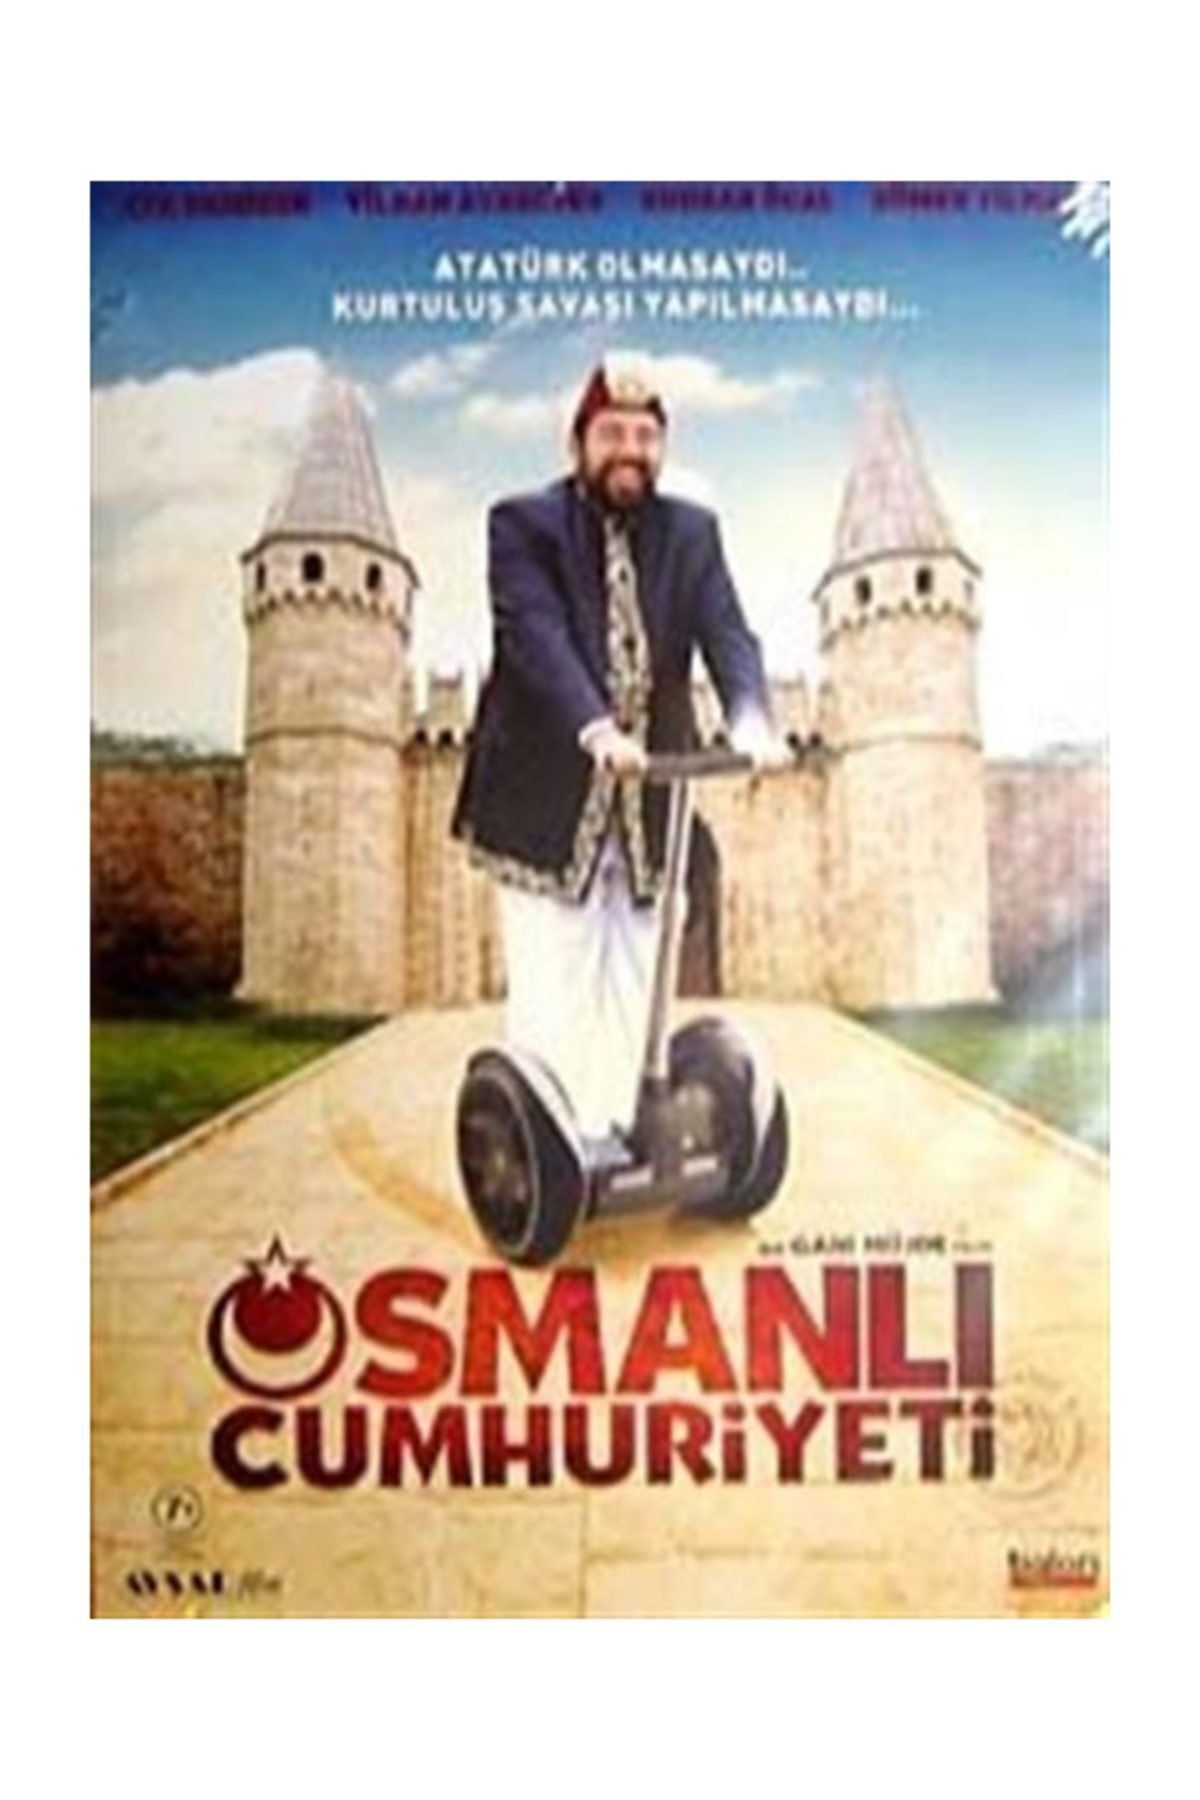 Tiglon Osmanlı Cumhuriyeti (dvd)